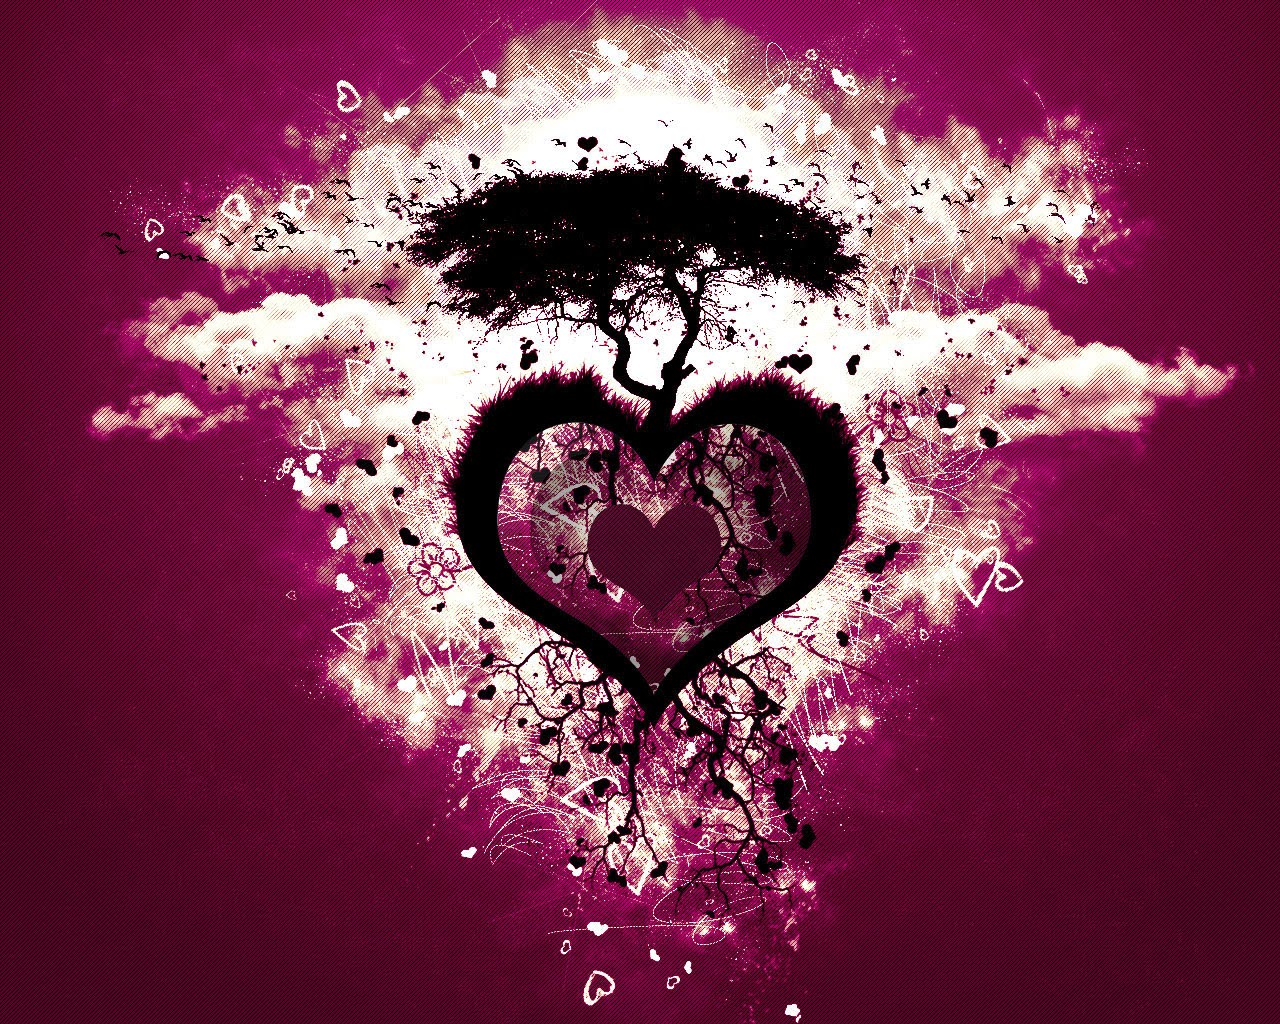 https://blogger.googleusercontent.com/img/b/R29vZ2xl/AVvXsEgLA5cV_mcHw-RwO_QCYpvBNCyAKVmm5fnXcaFhShw2SX5037piCg7nvitr22qEePolkuTWRzCtZ4bHqUlqeQX63kcsWTEPgxUiU6QHMah1bQPf7igaxoTfia-jg9ODyQ24Ii0g_0x753c/s1600/Purple-heart-love-tree-original.jpg